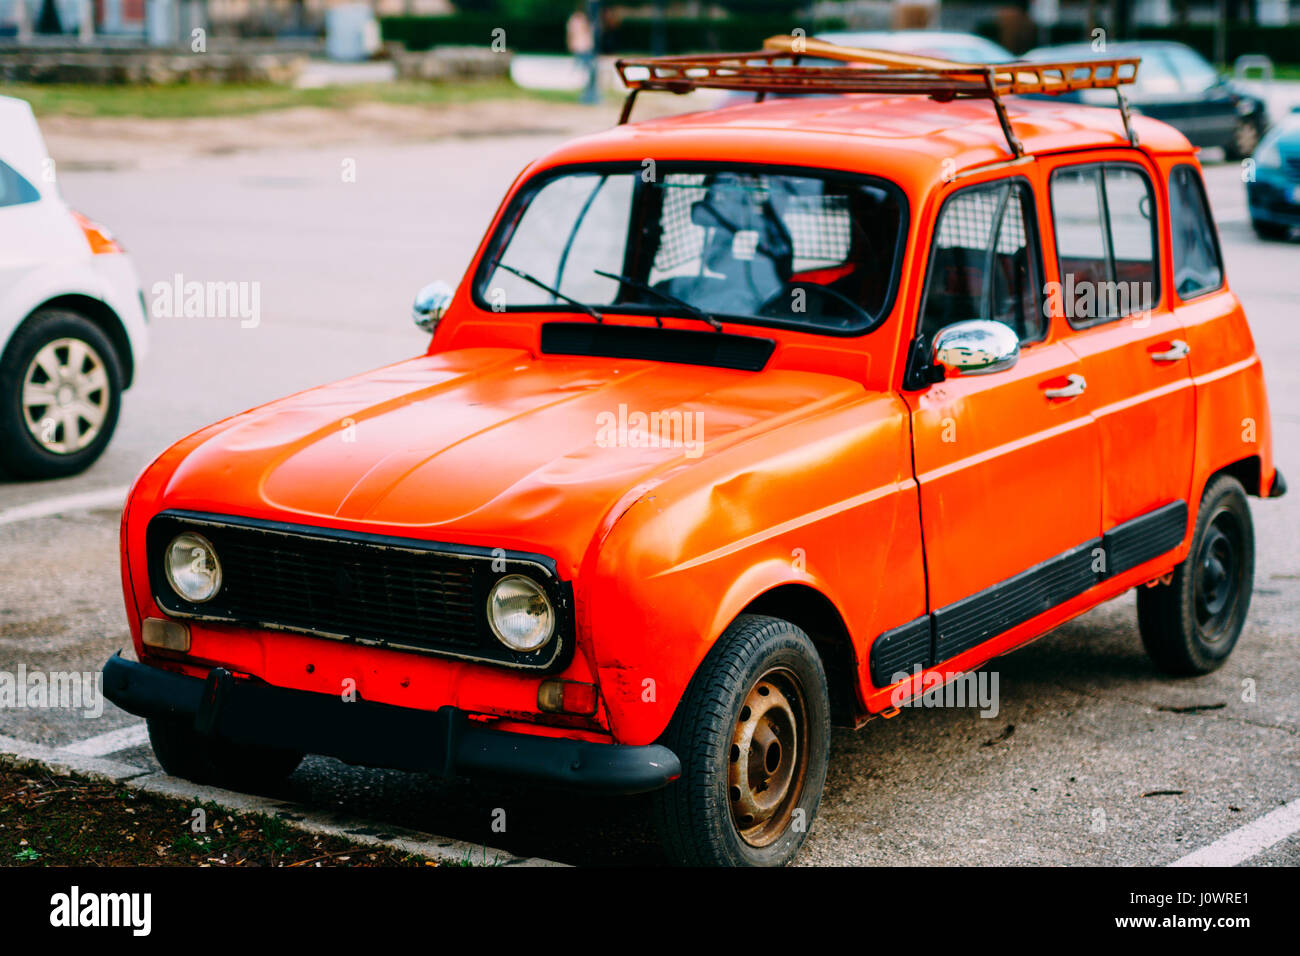 Red retro car in Montenegro, marks of Zastava, production of Yugoslavia. Stock Photo